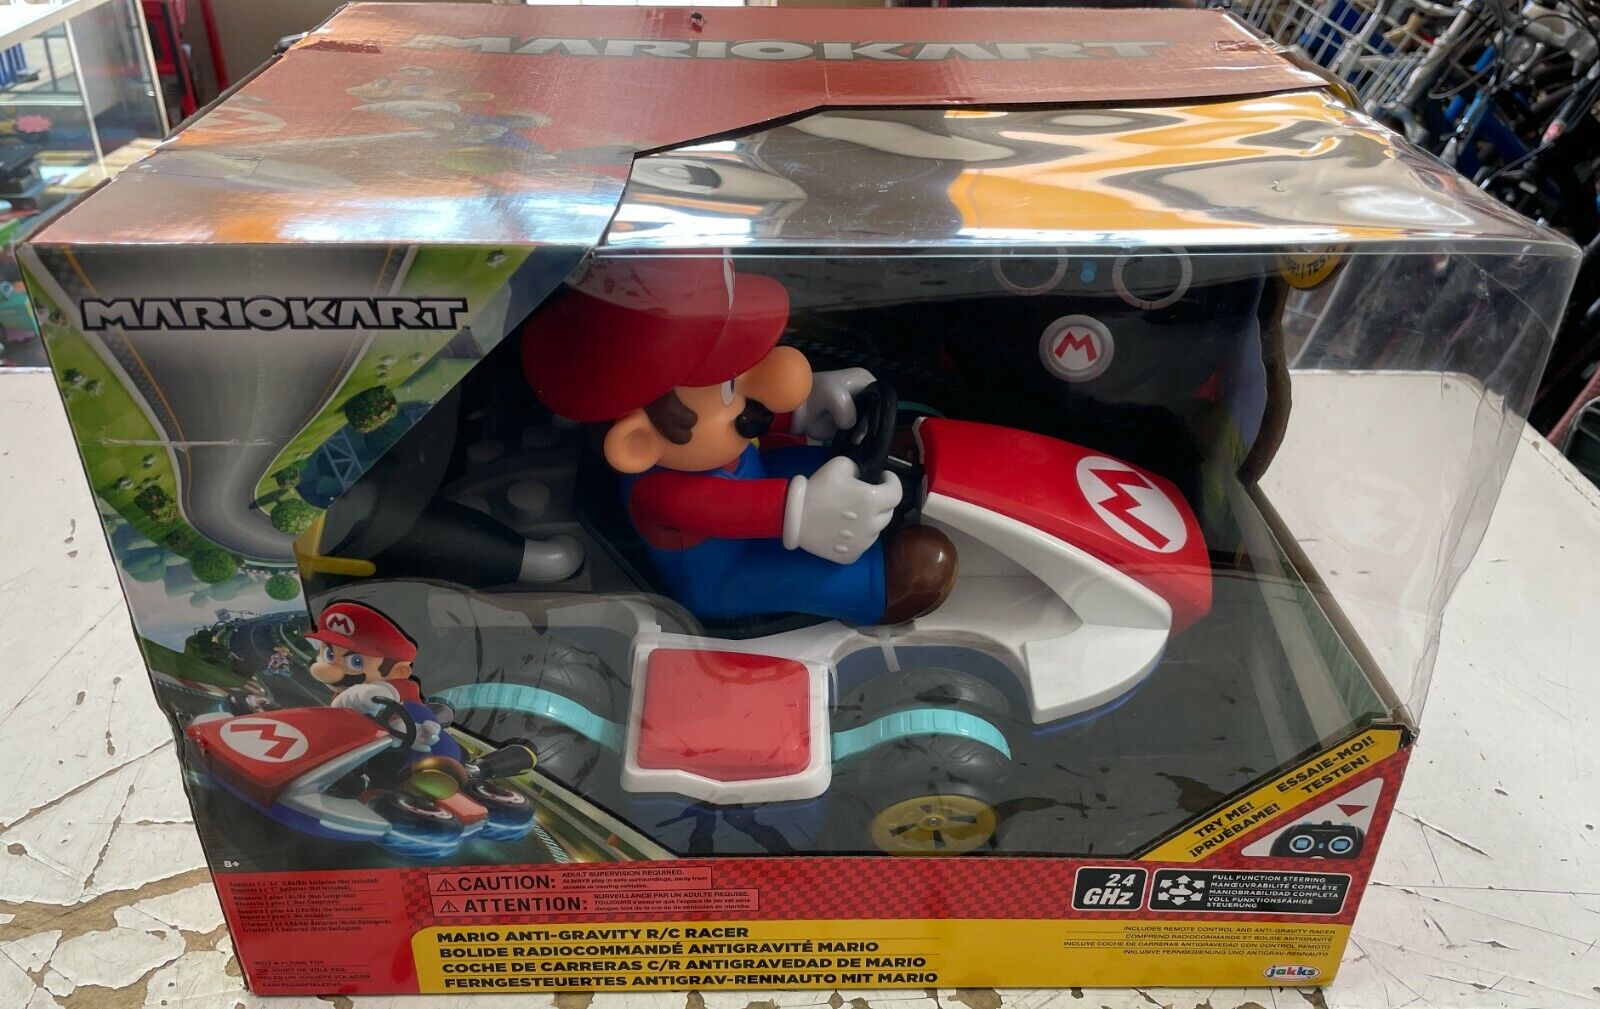 Mario Kart Mario Anti-Gravity R/C Racer - 86905